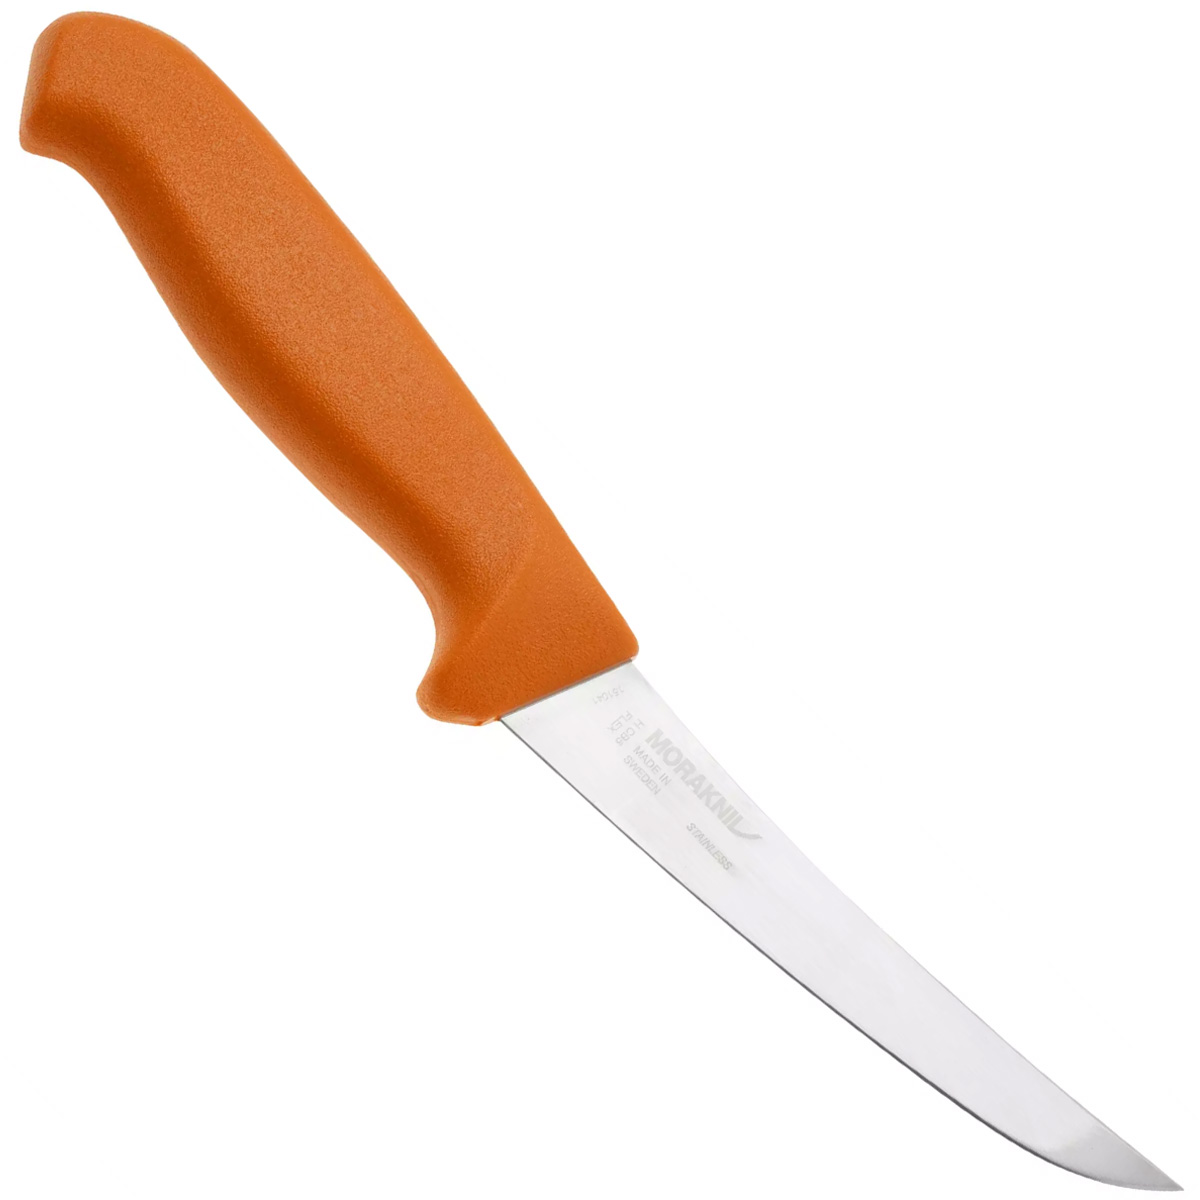 Morakniv Hunting Curved Boning (S) Knife Olive Green & Burnt Orange 14231